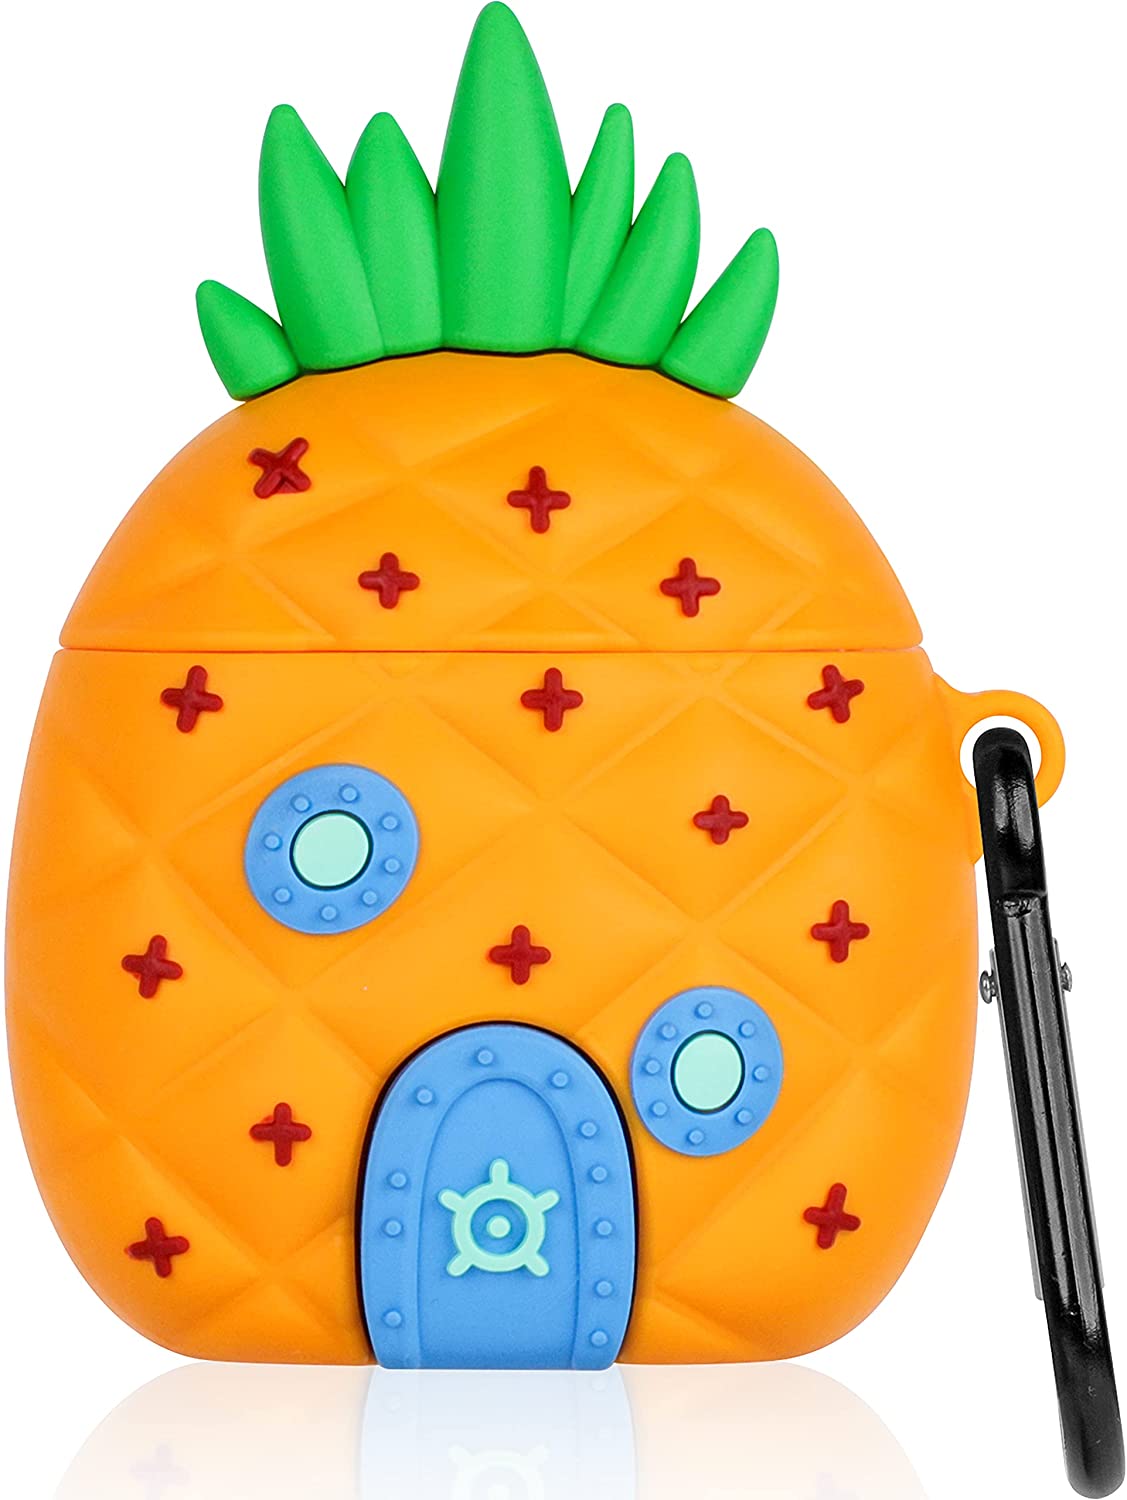 SpongeBob Pineapple House Airpods Case